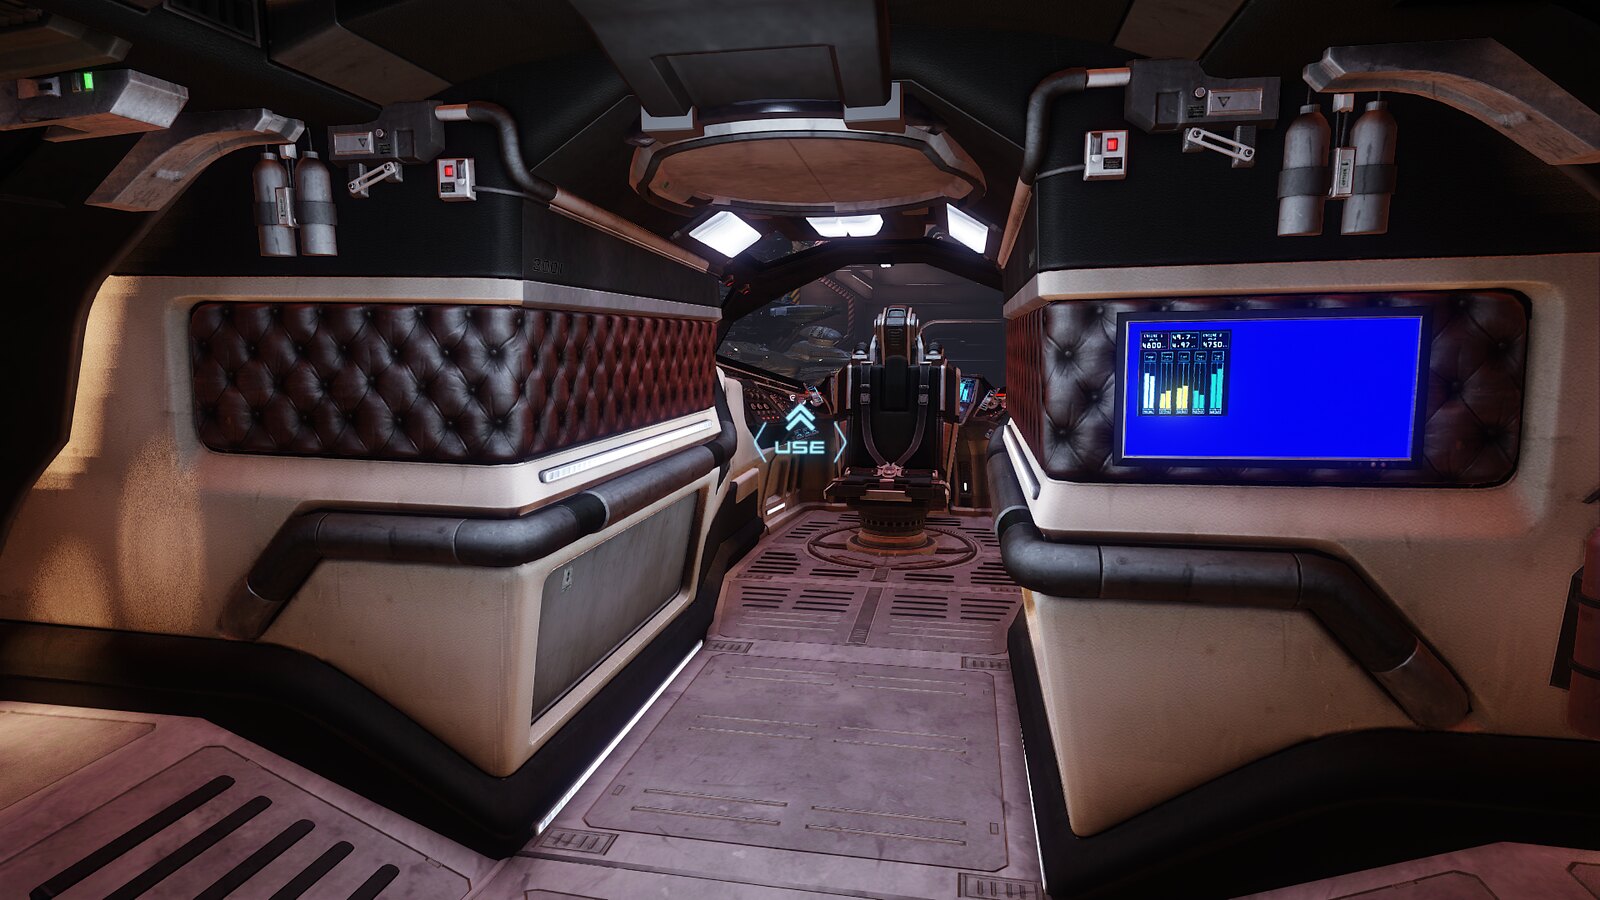 Customize and roam around in your ship in Star Citizen's Hangar module